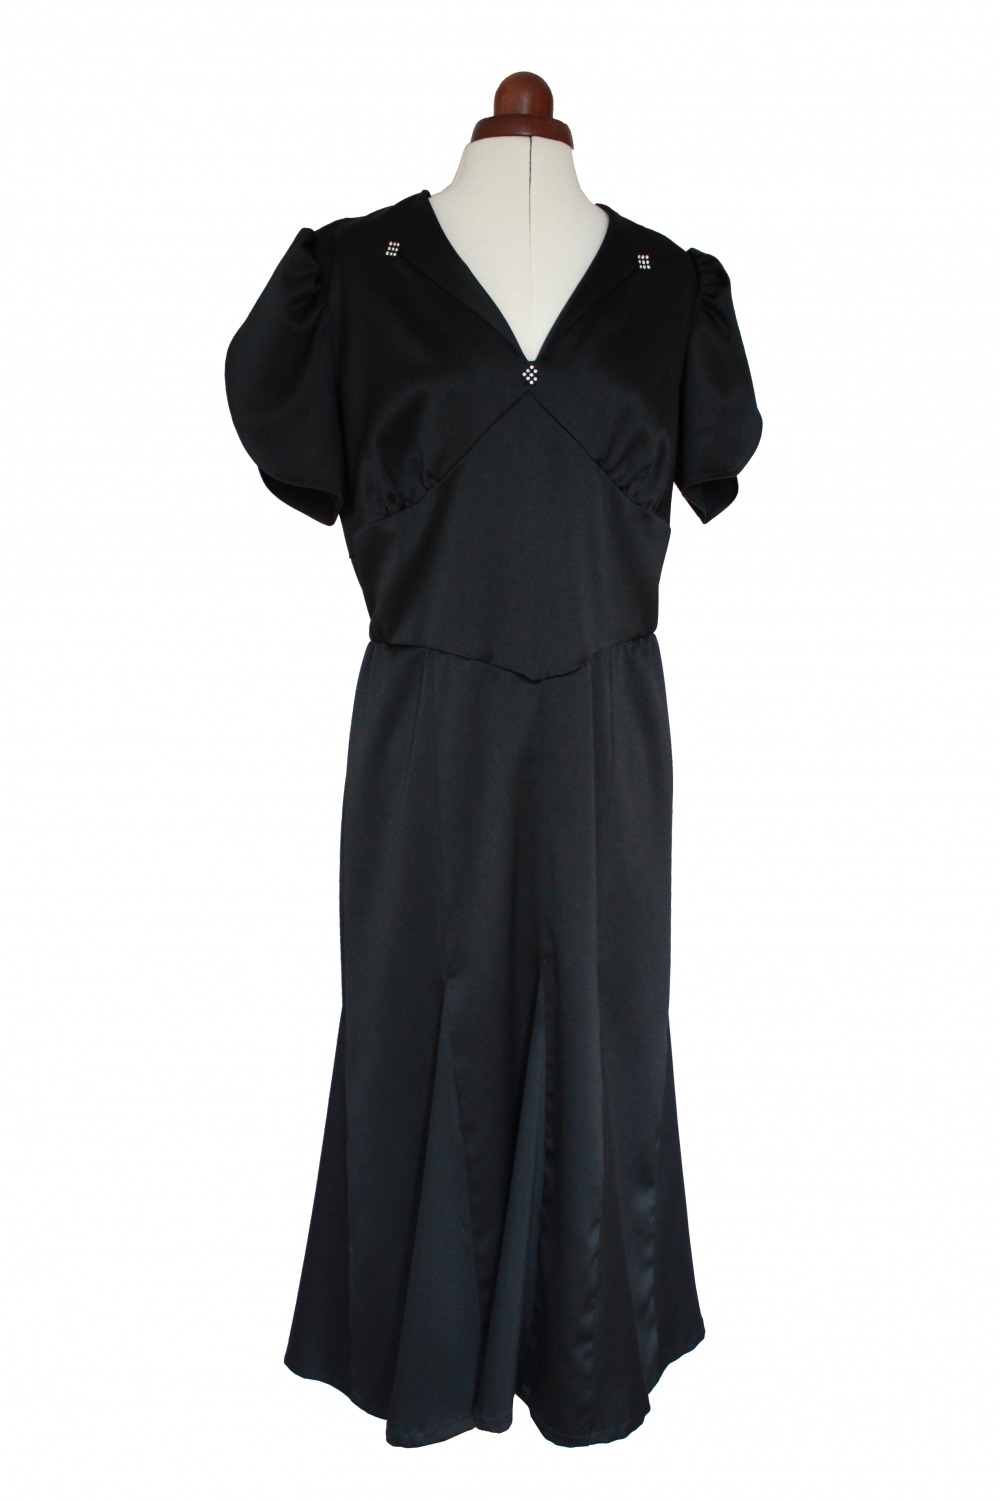 Ladies 1940s Wartime WW11 Goodwood Evening Dress Size 14 - 16  Image